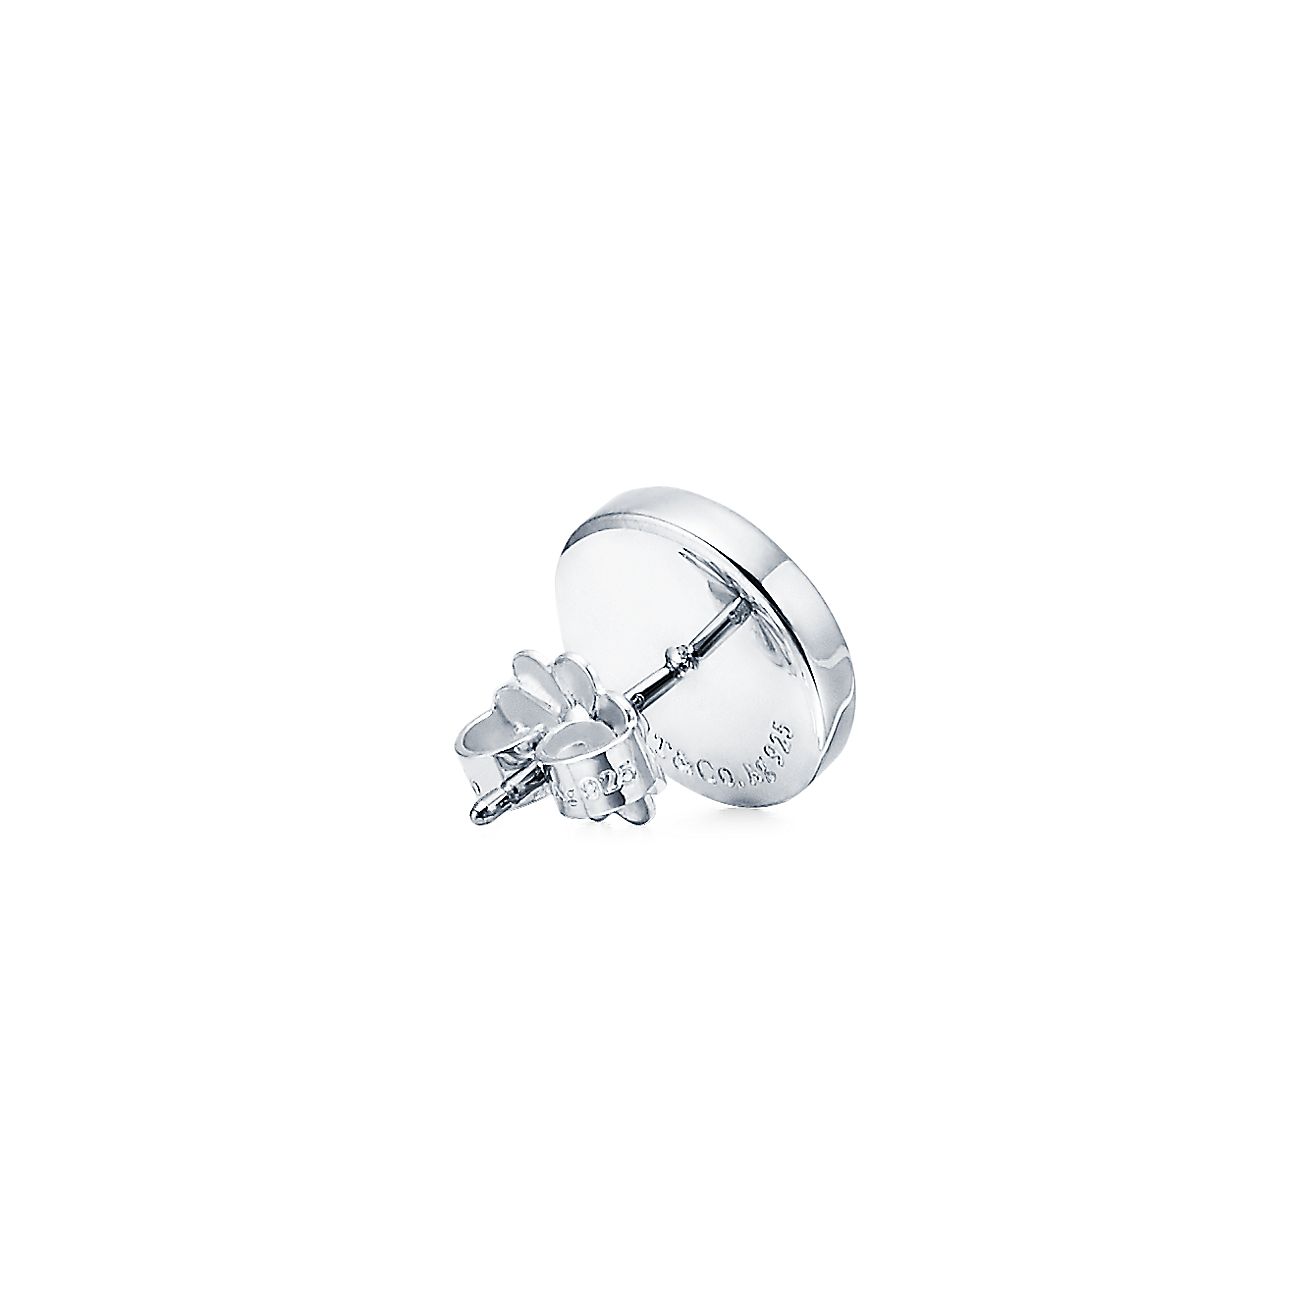 Tiffany 1837® circle earrings in sterling silver.